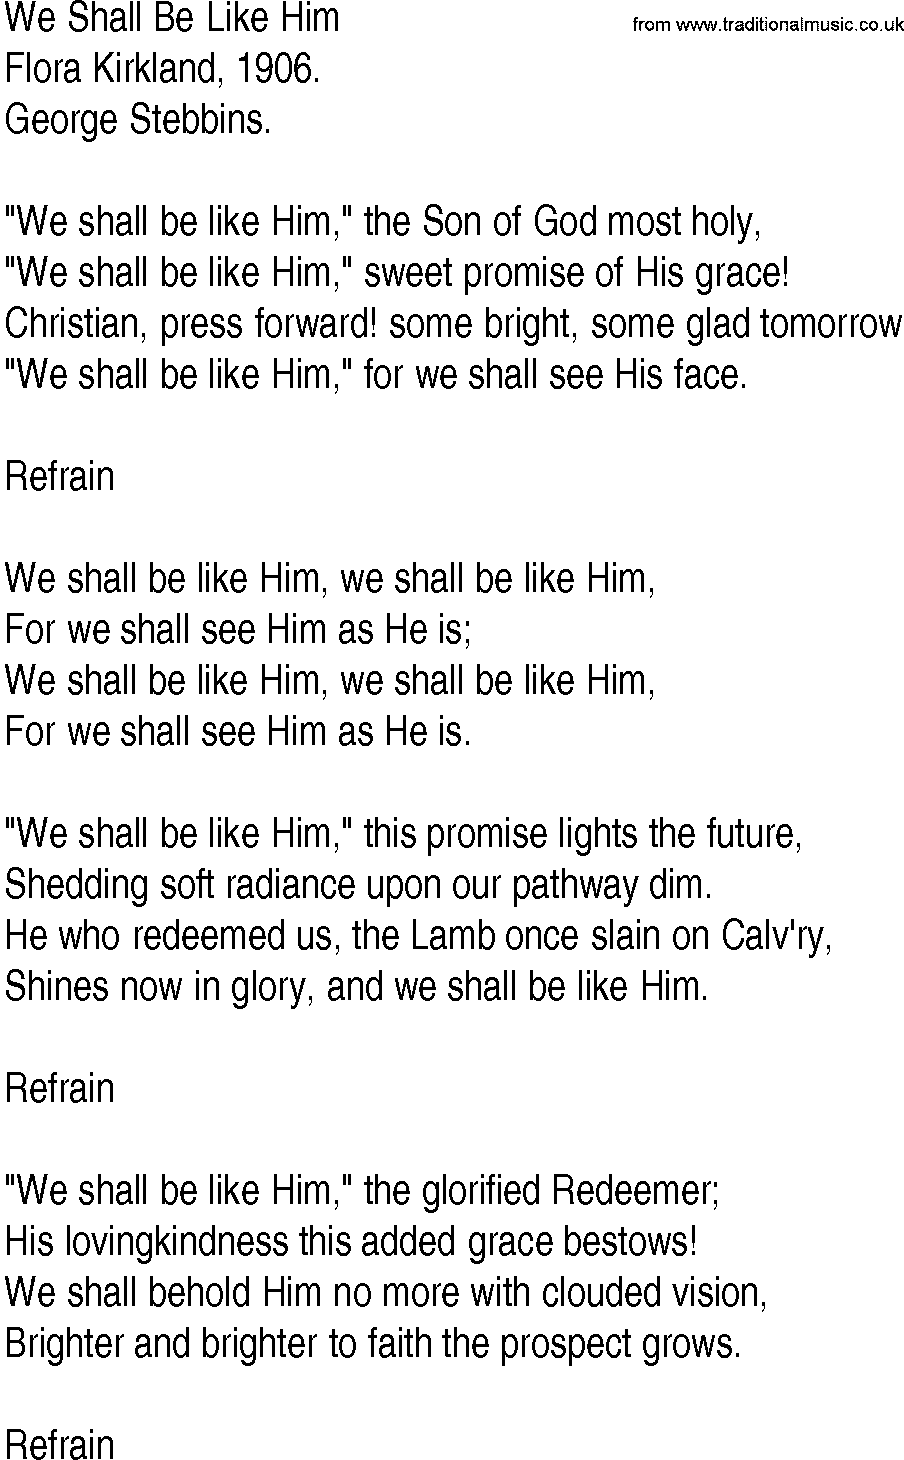 Hymn and Gospel Song: We Shall Be Like Him by Flora Kirkland lyrics